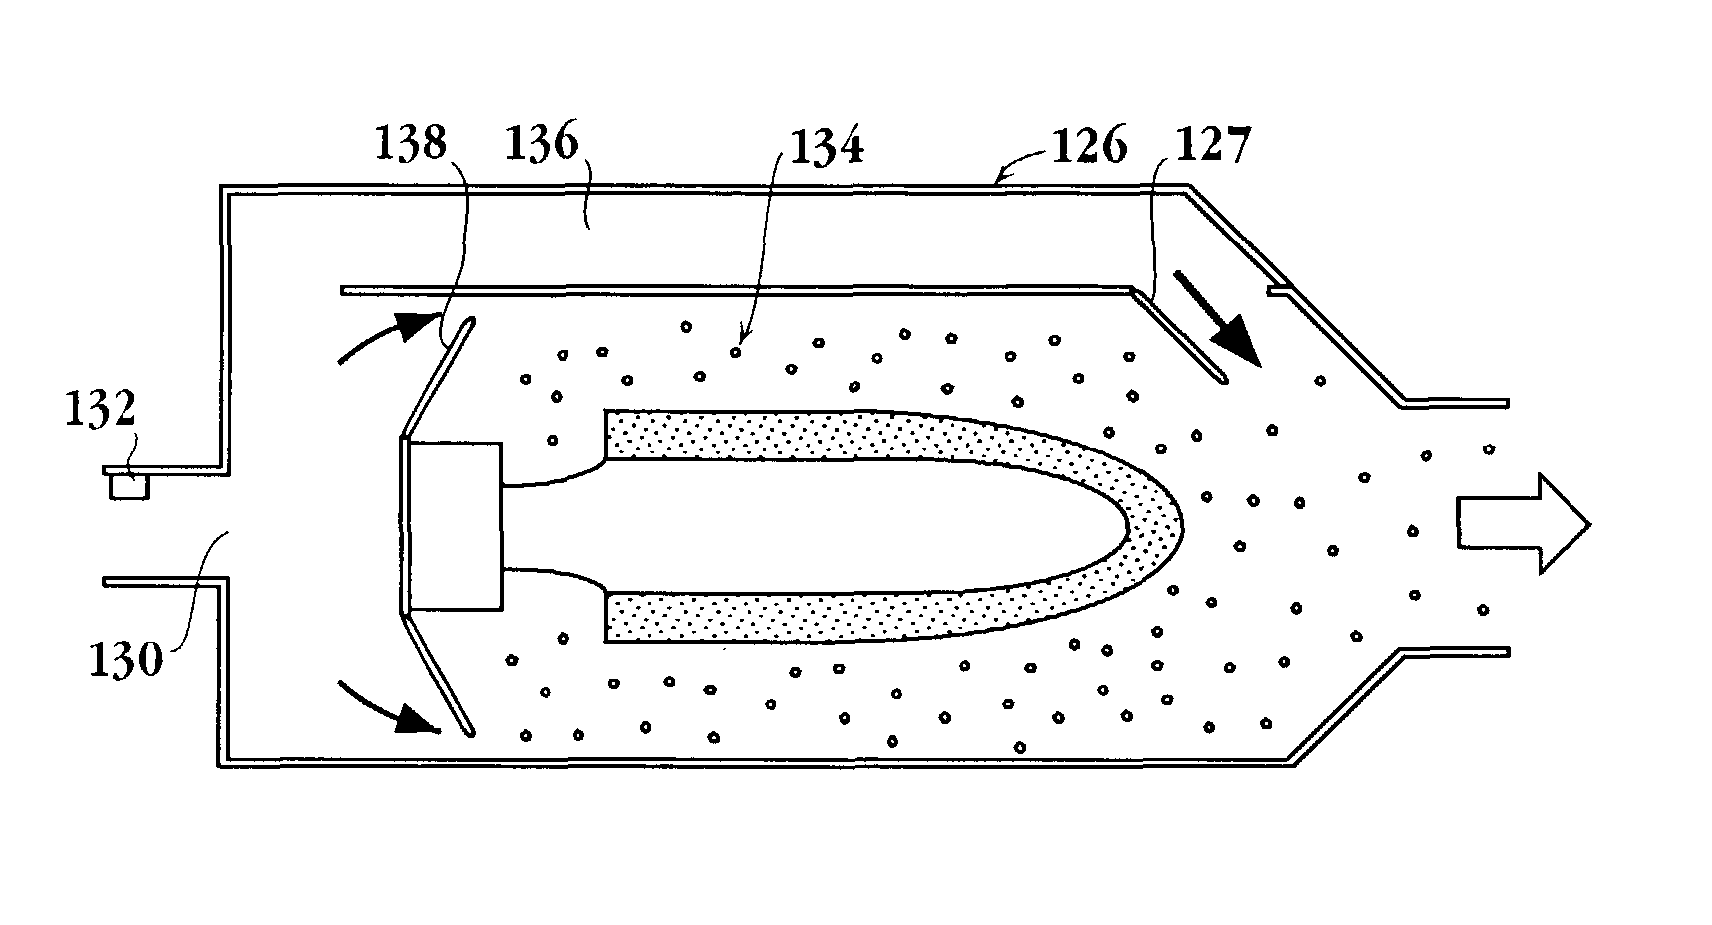 Inhalation device for producing a drug aerosol